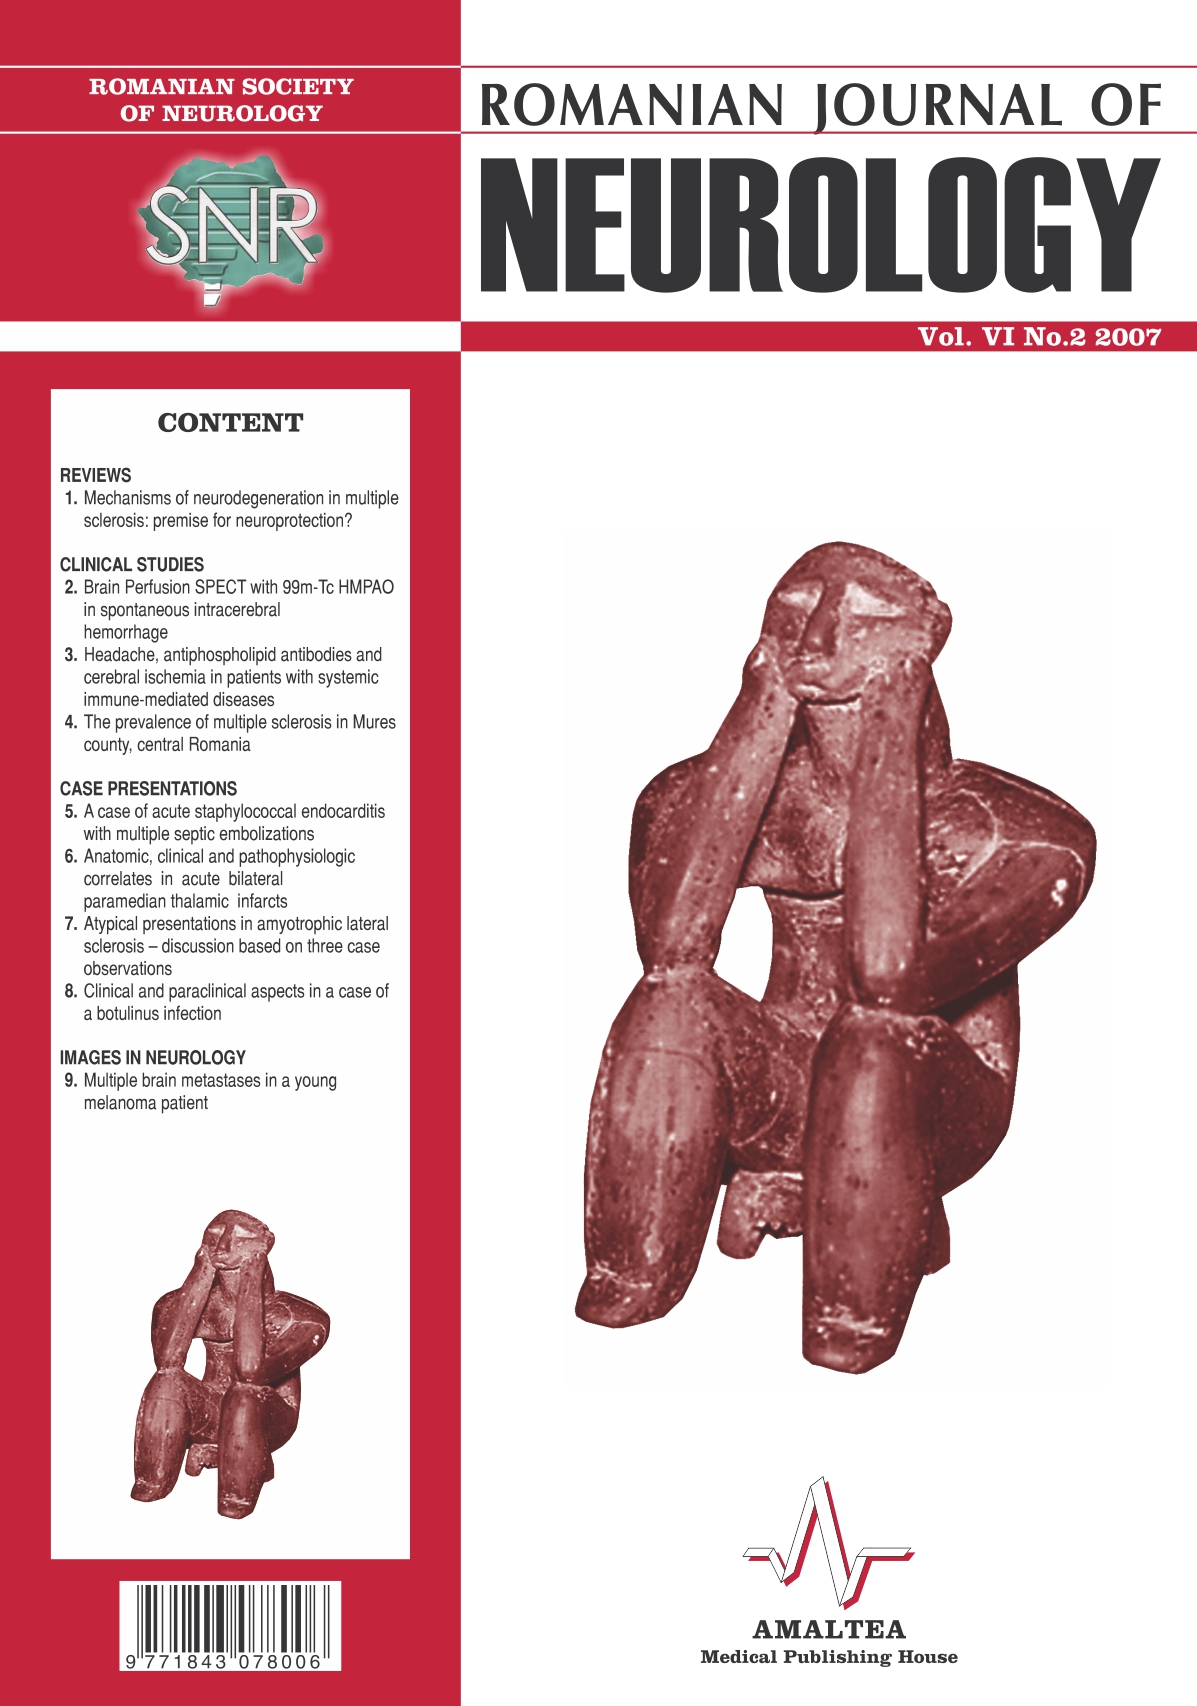 Romanian Journal of Neurology, Volume VI, No. 2, 2007